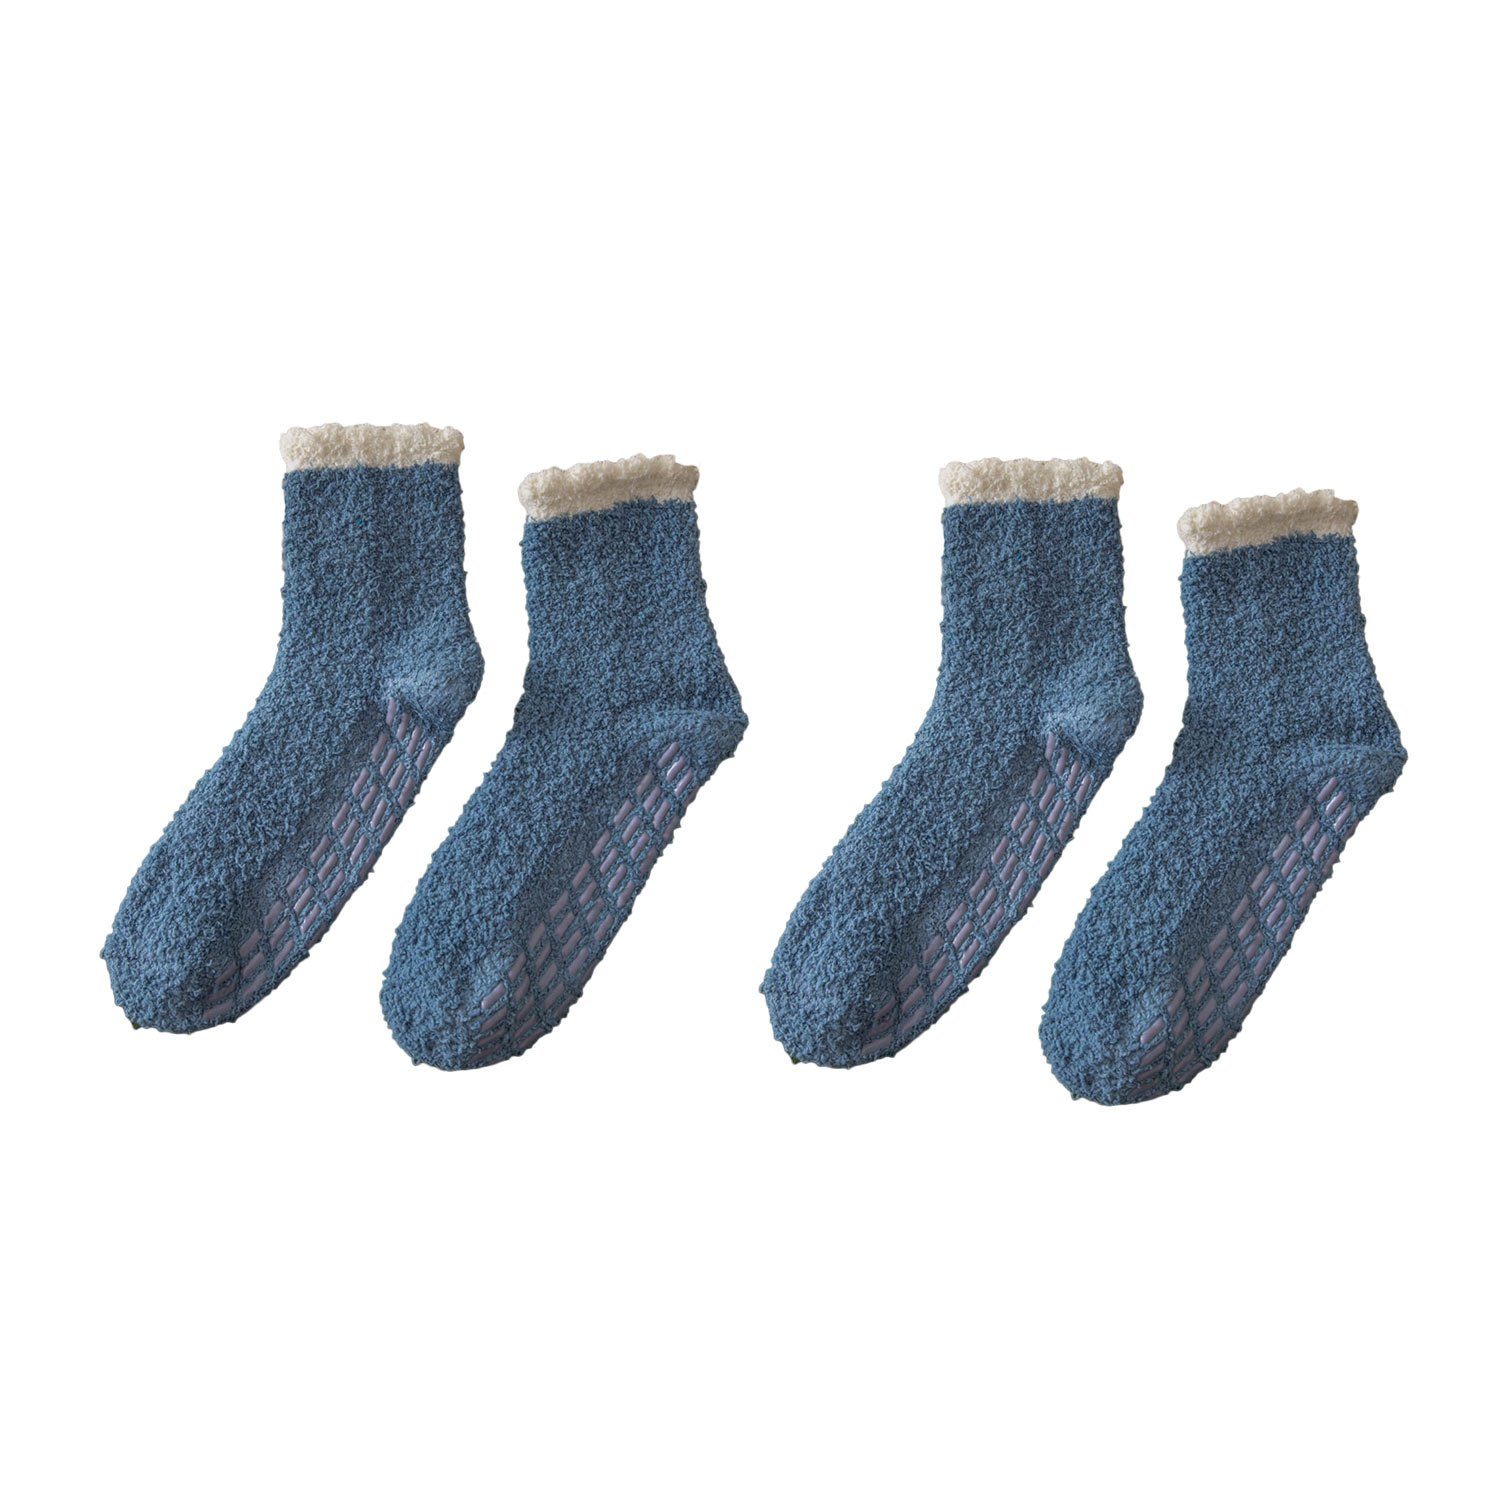 MAGICSHE Langsocken 2 Paare für Winter weiche flauschige Socken Rutschfeste und warme Fleece Socken blau